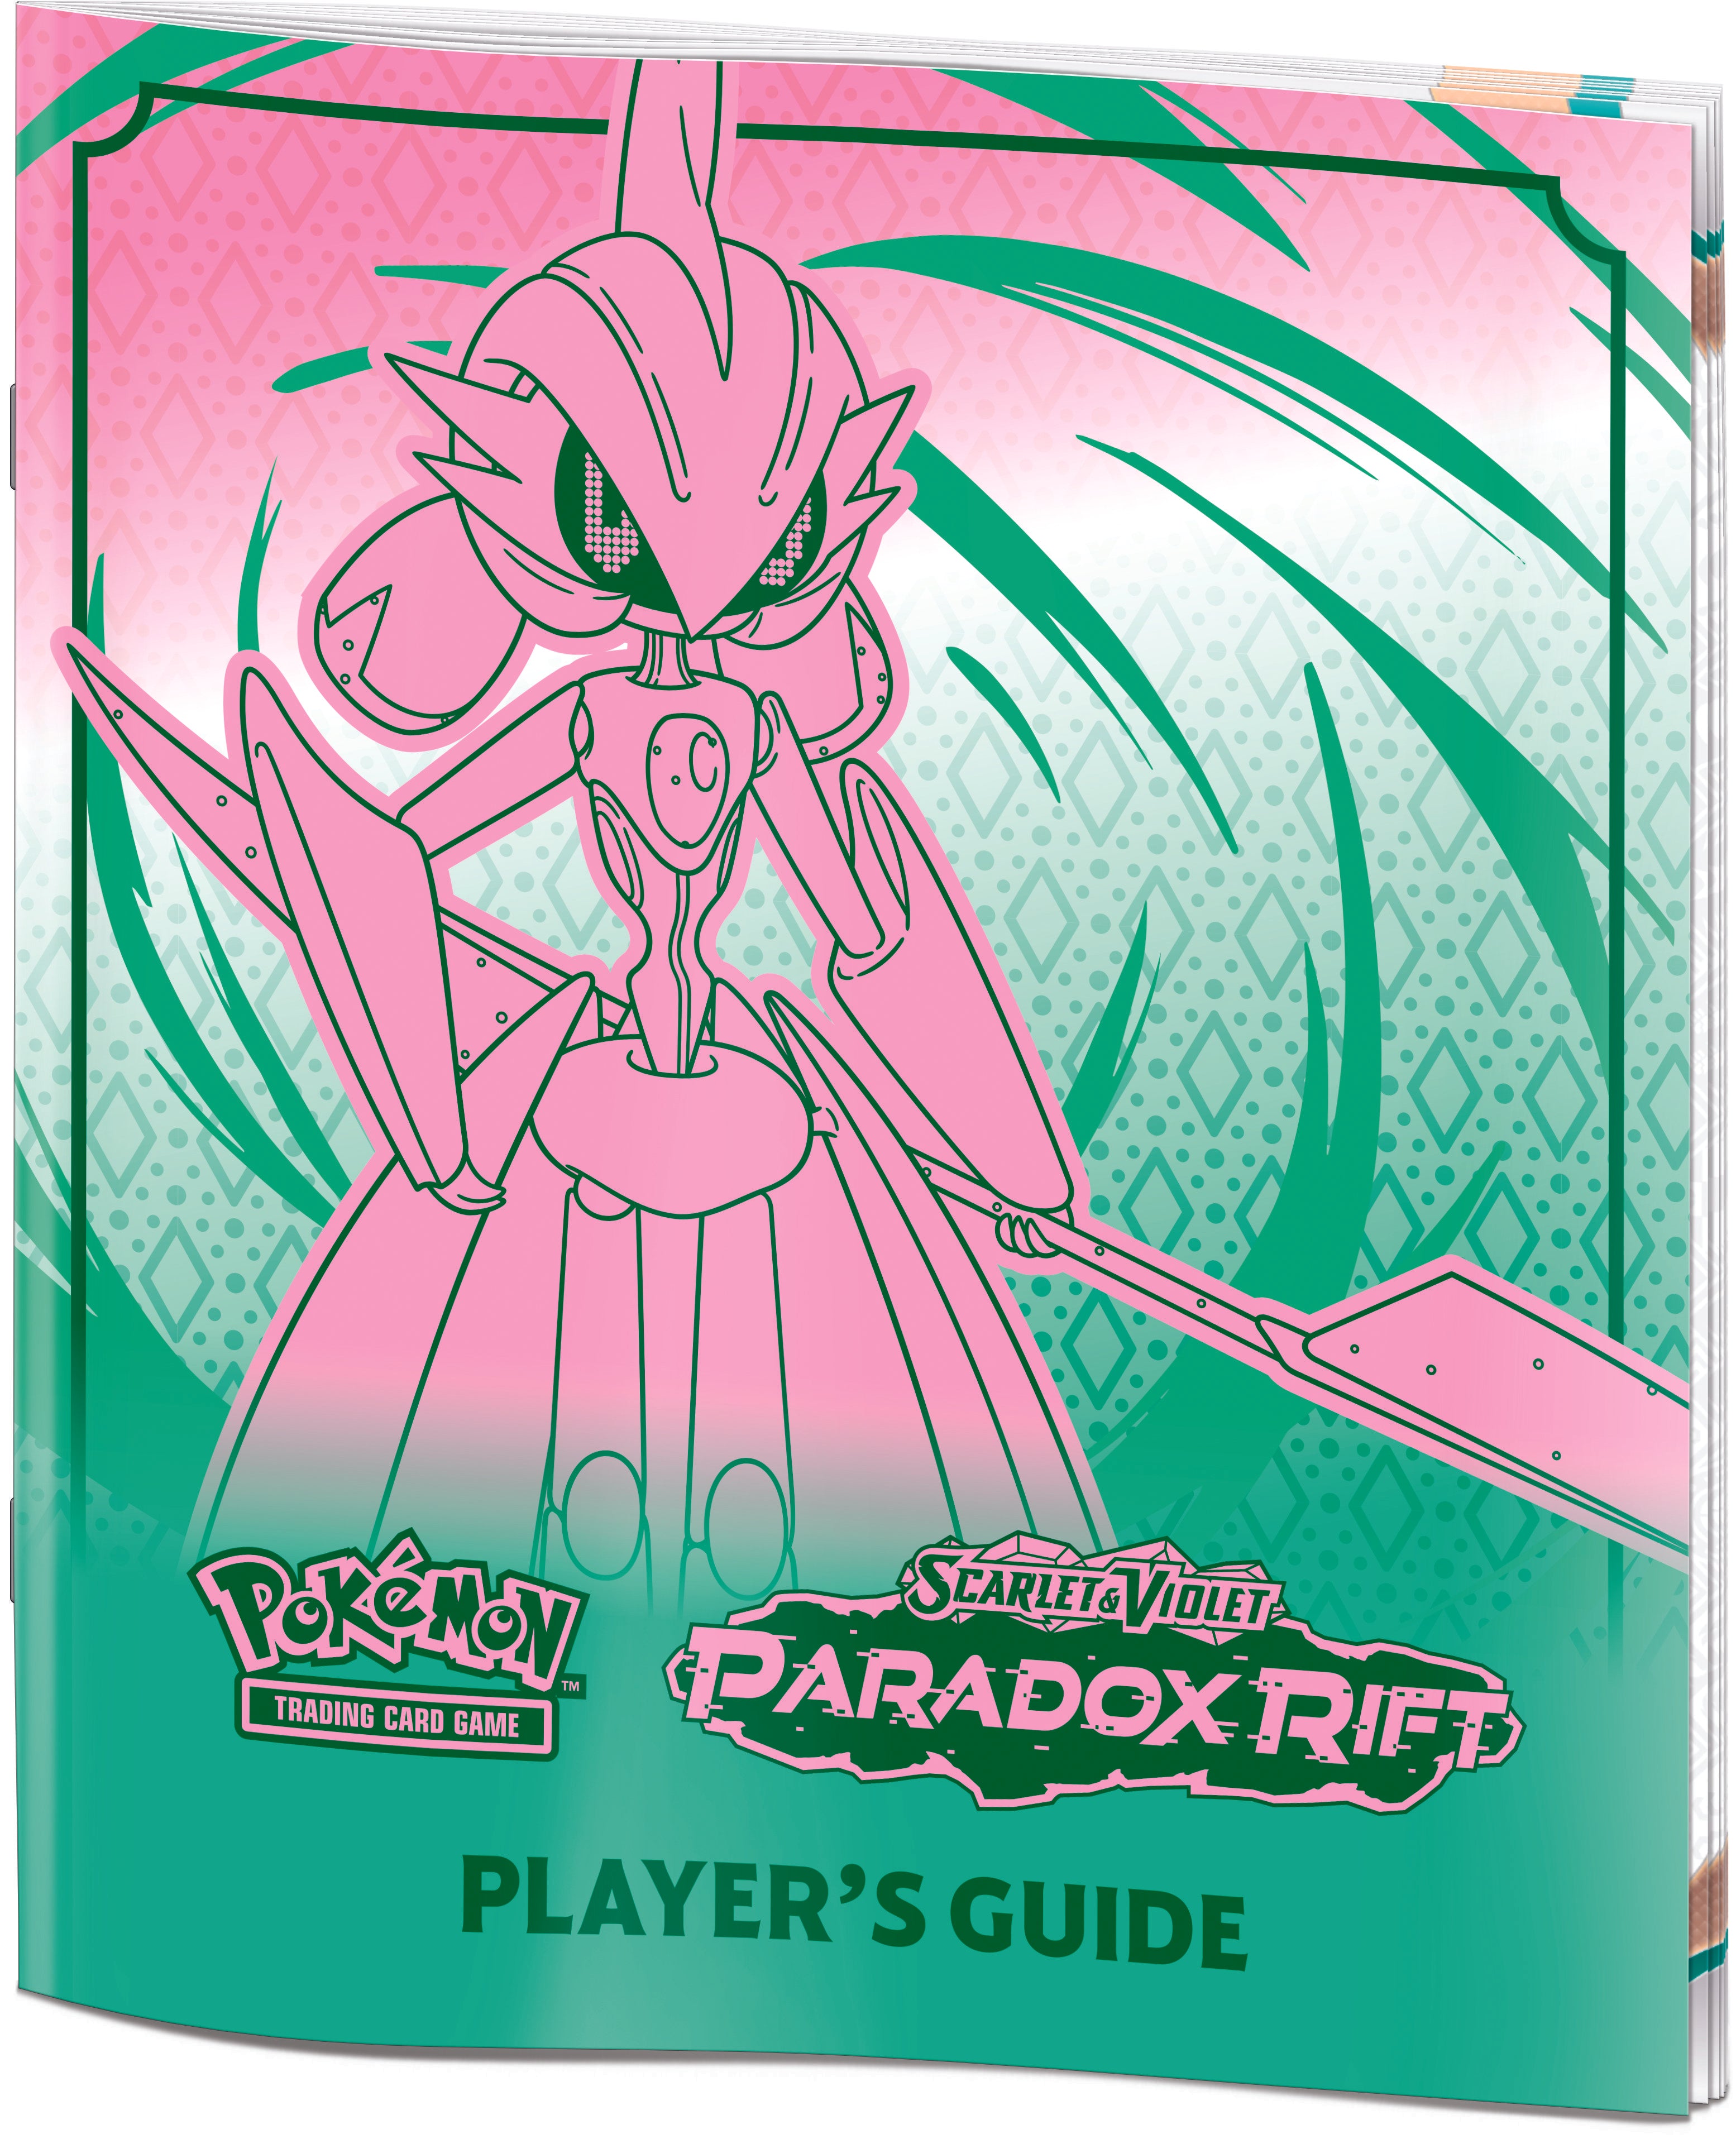 Pokemon TCG Scarlet & Violet: Paradox Rift - Elite Trainer Box Iron Valiant en Ingles